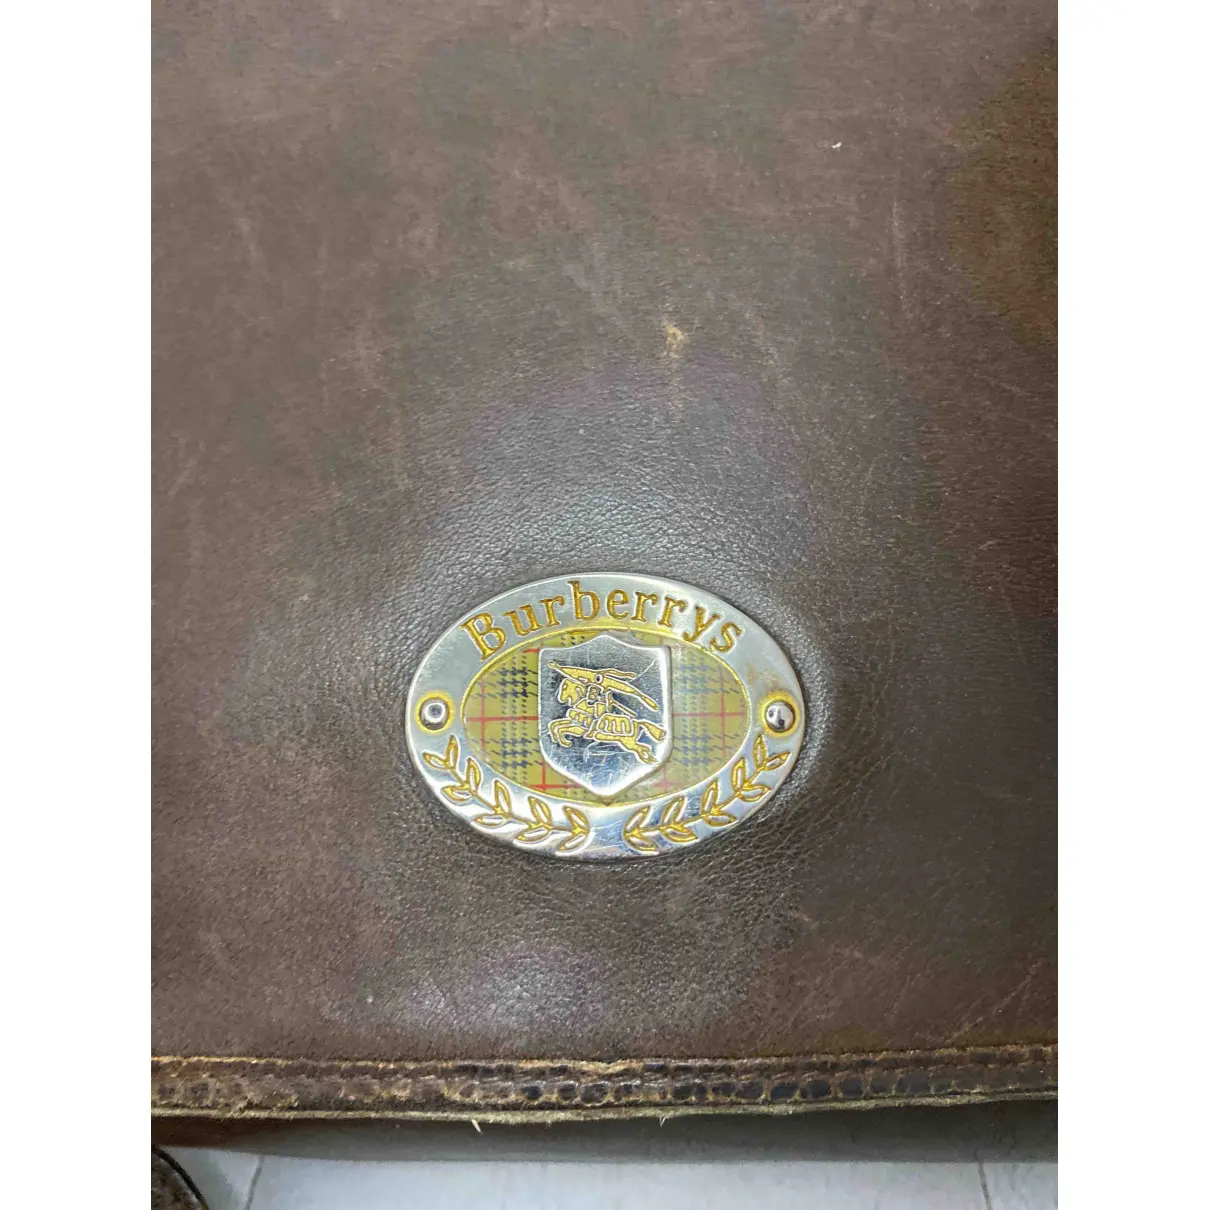 Buy Burberry TB bag leather handbag online